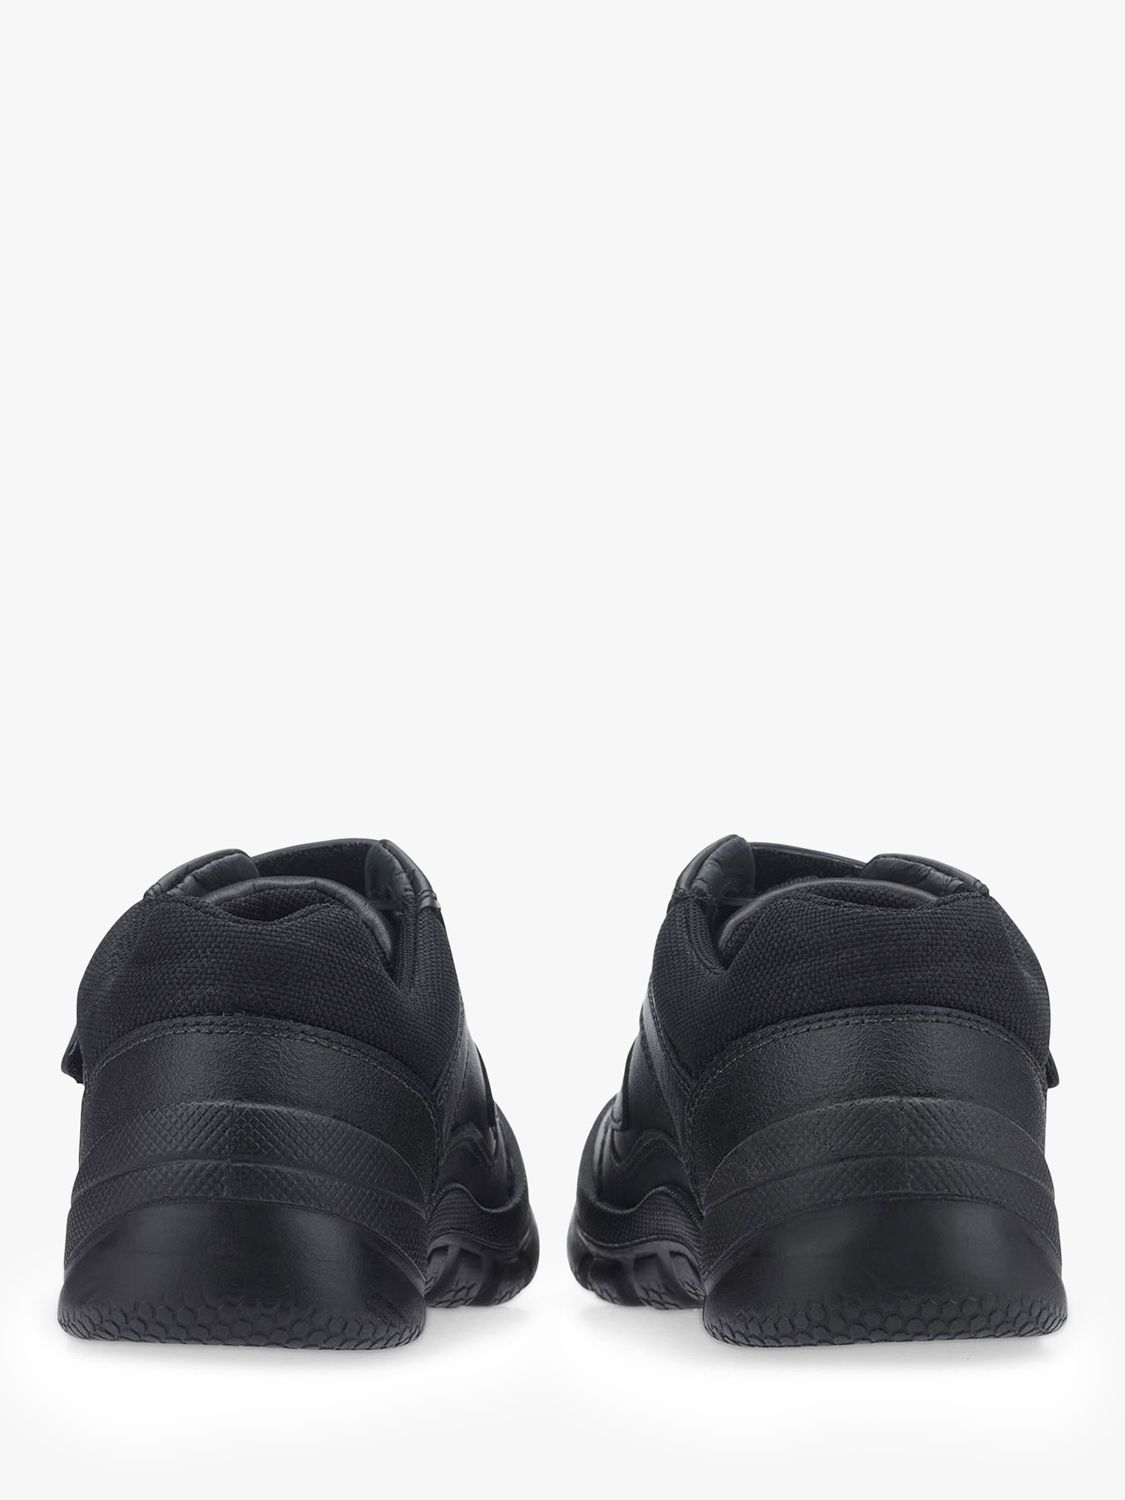 Start-Rite Kids' Rhino Warrior Shoes, Black, 3F